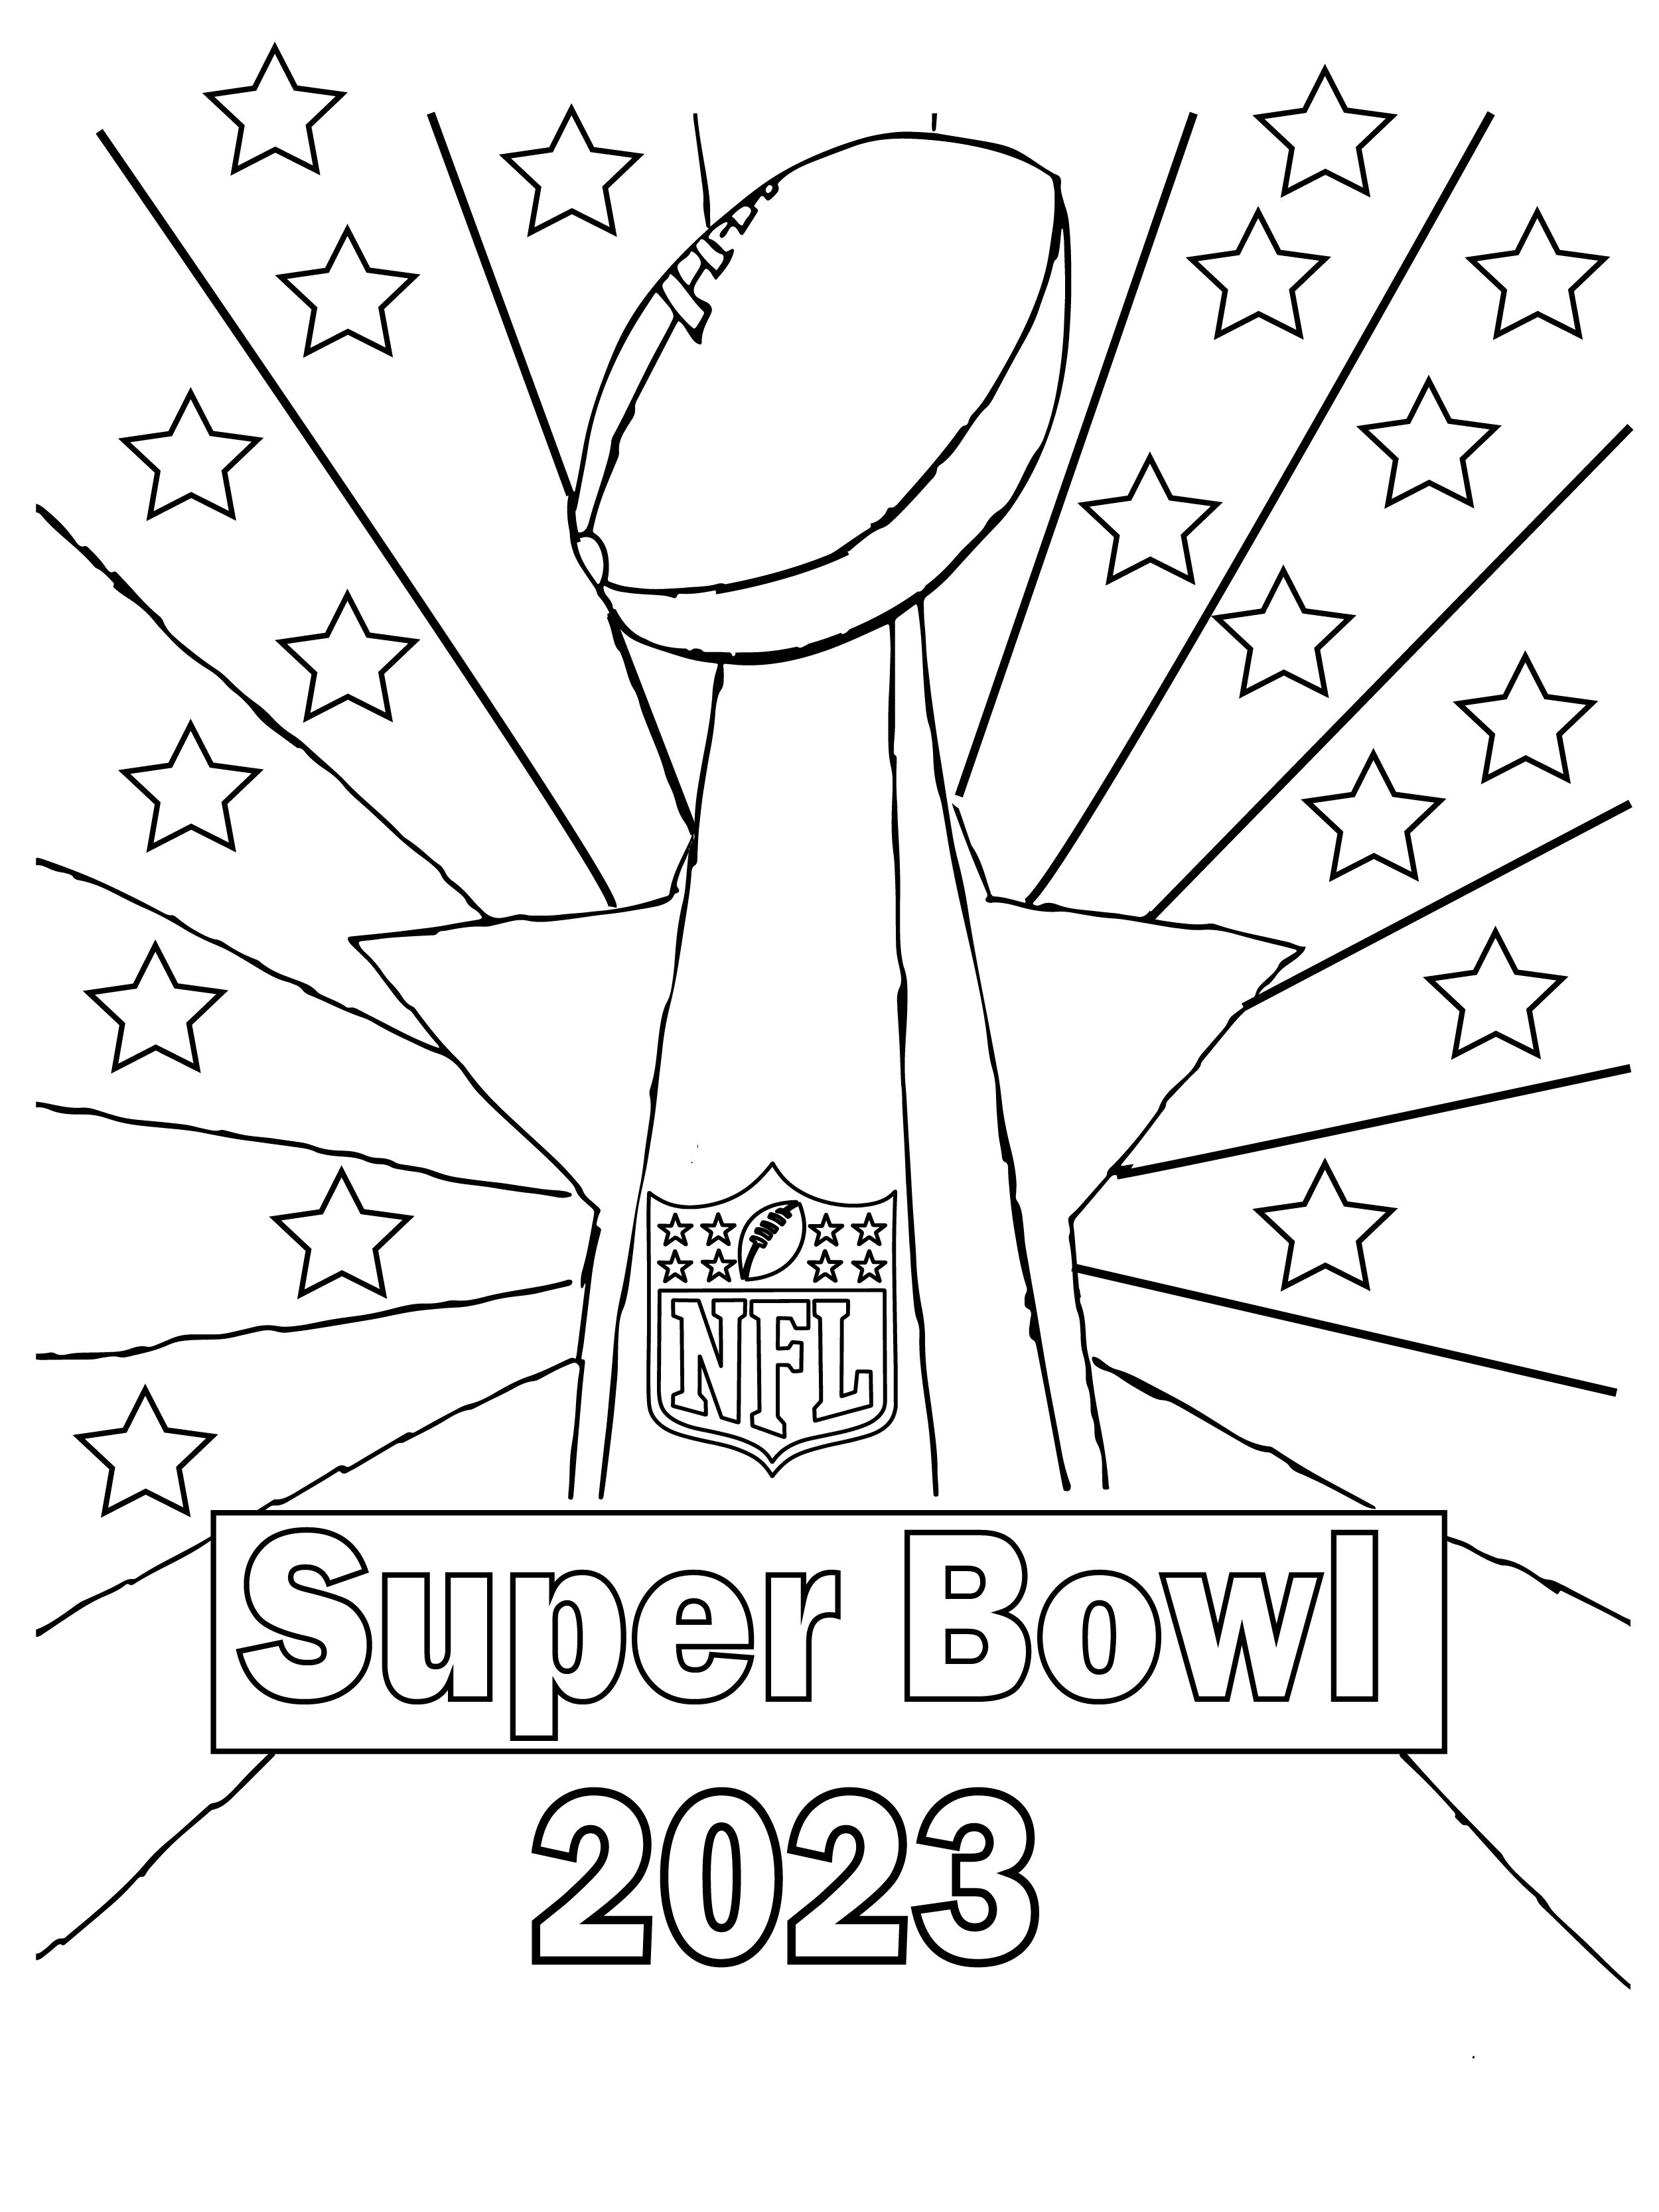 Super Bowl Coloring Pages Home Design Ideas